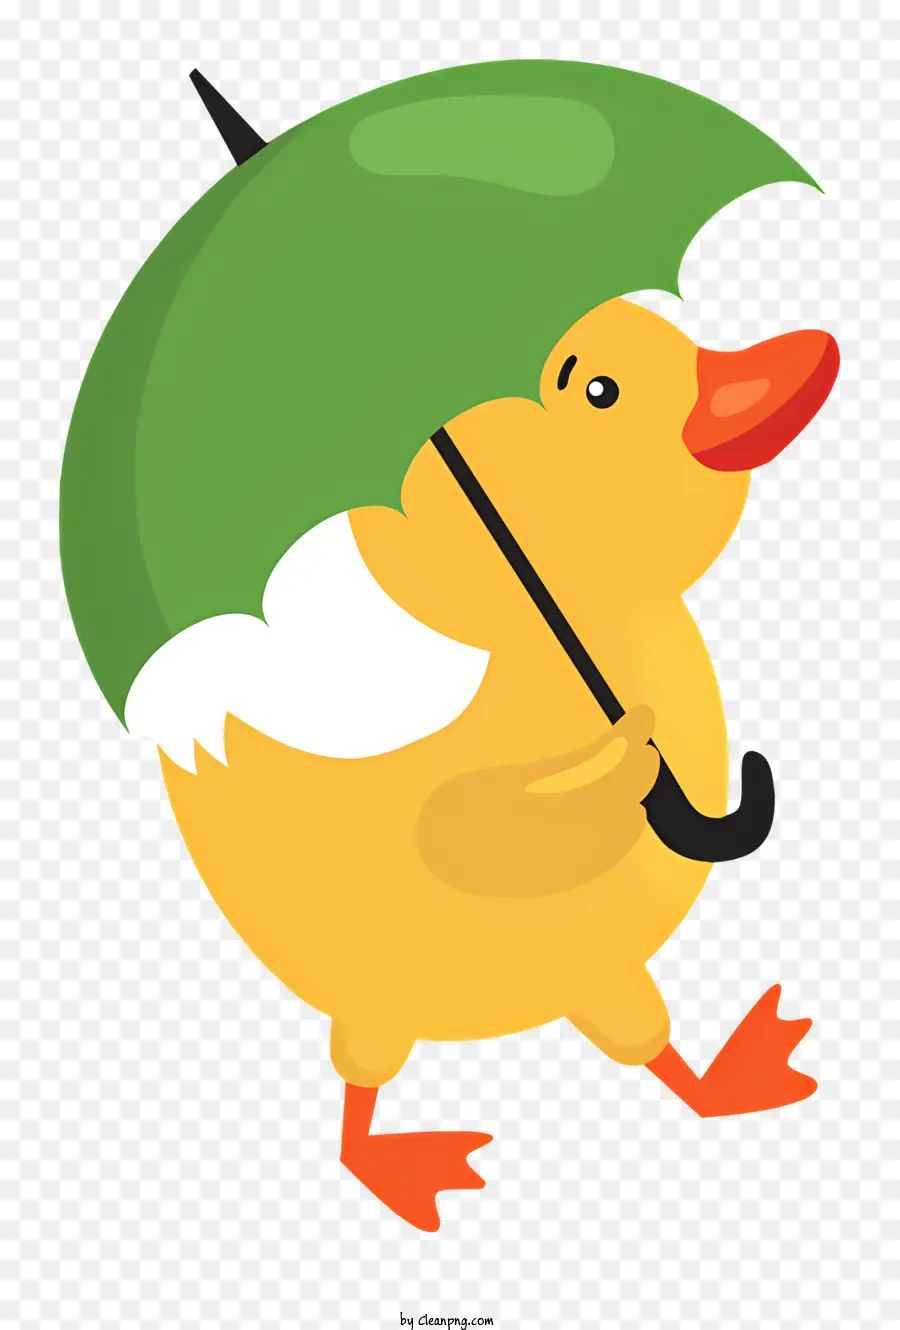 yellow duck green umbrella duck walking black beak brown eyes